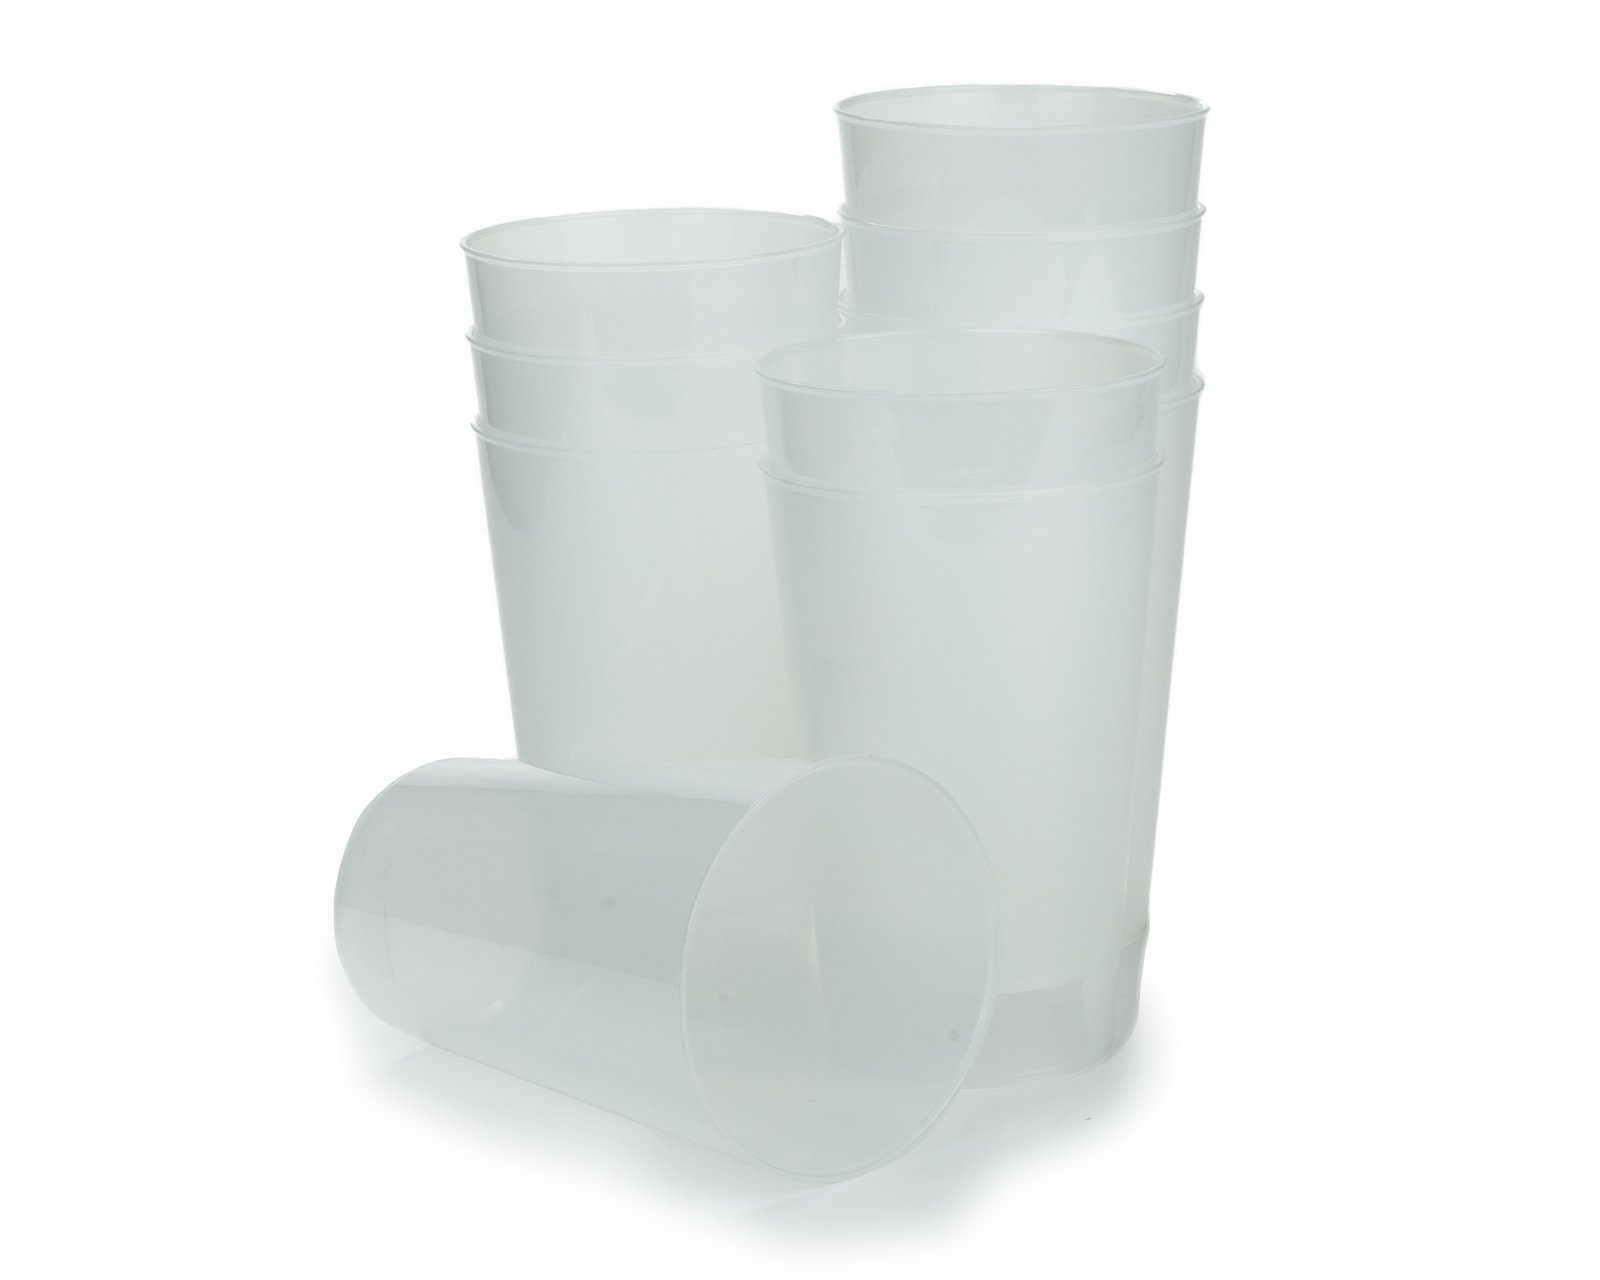 OCTOPUS Becher Mehrwegbecher Plastikbecher Kunststoff, 500ml, bruchsicherem Transparent Plast 25 Stück aus